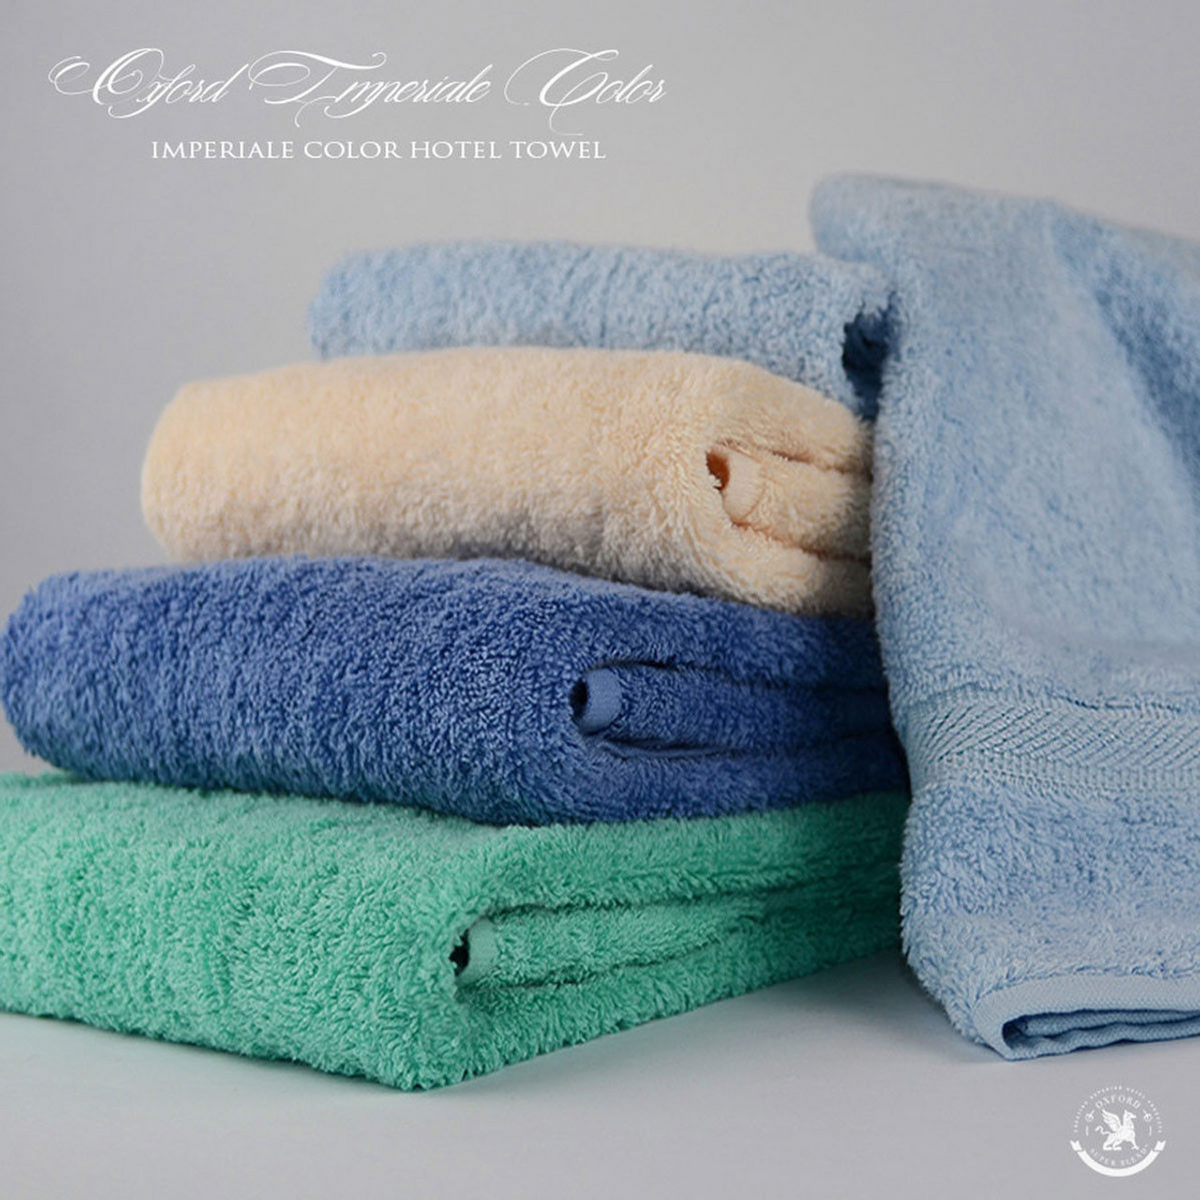 Bath Sheet - Oxford Imperiale Color Towel